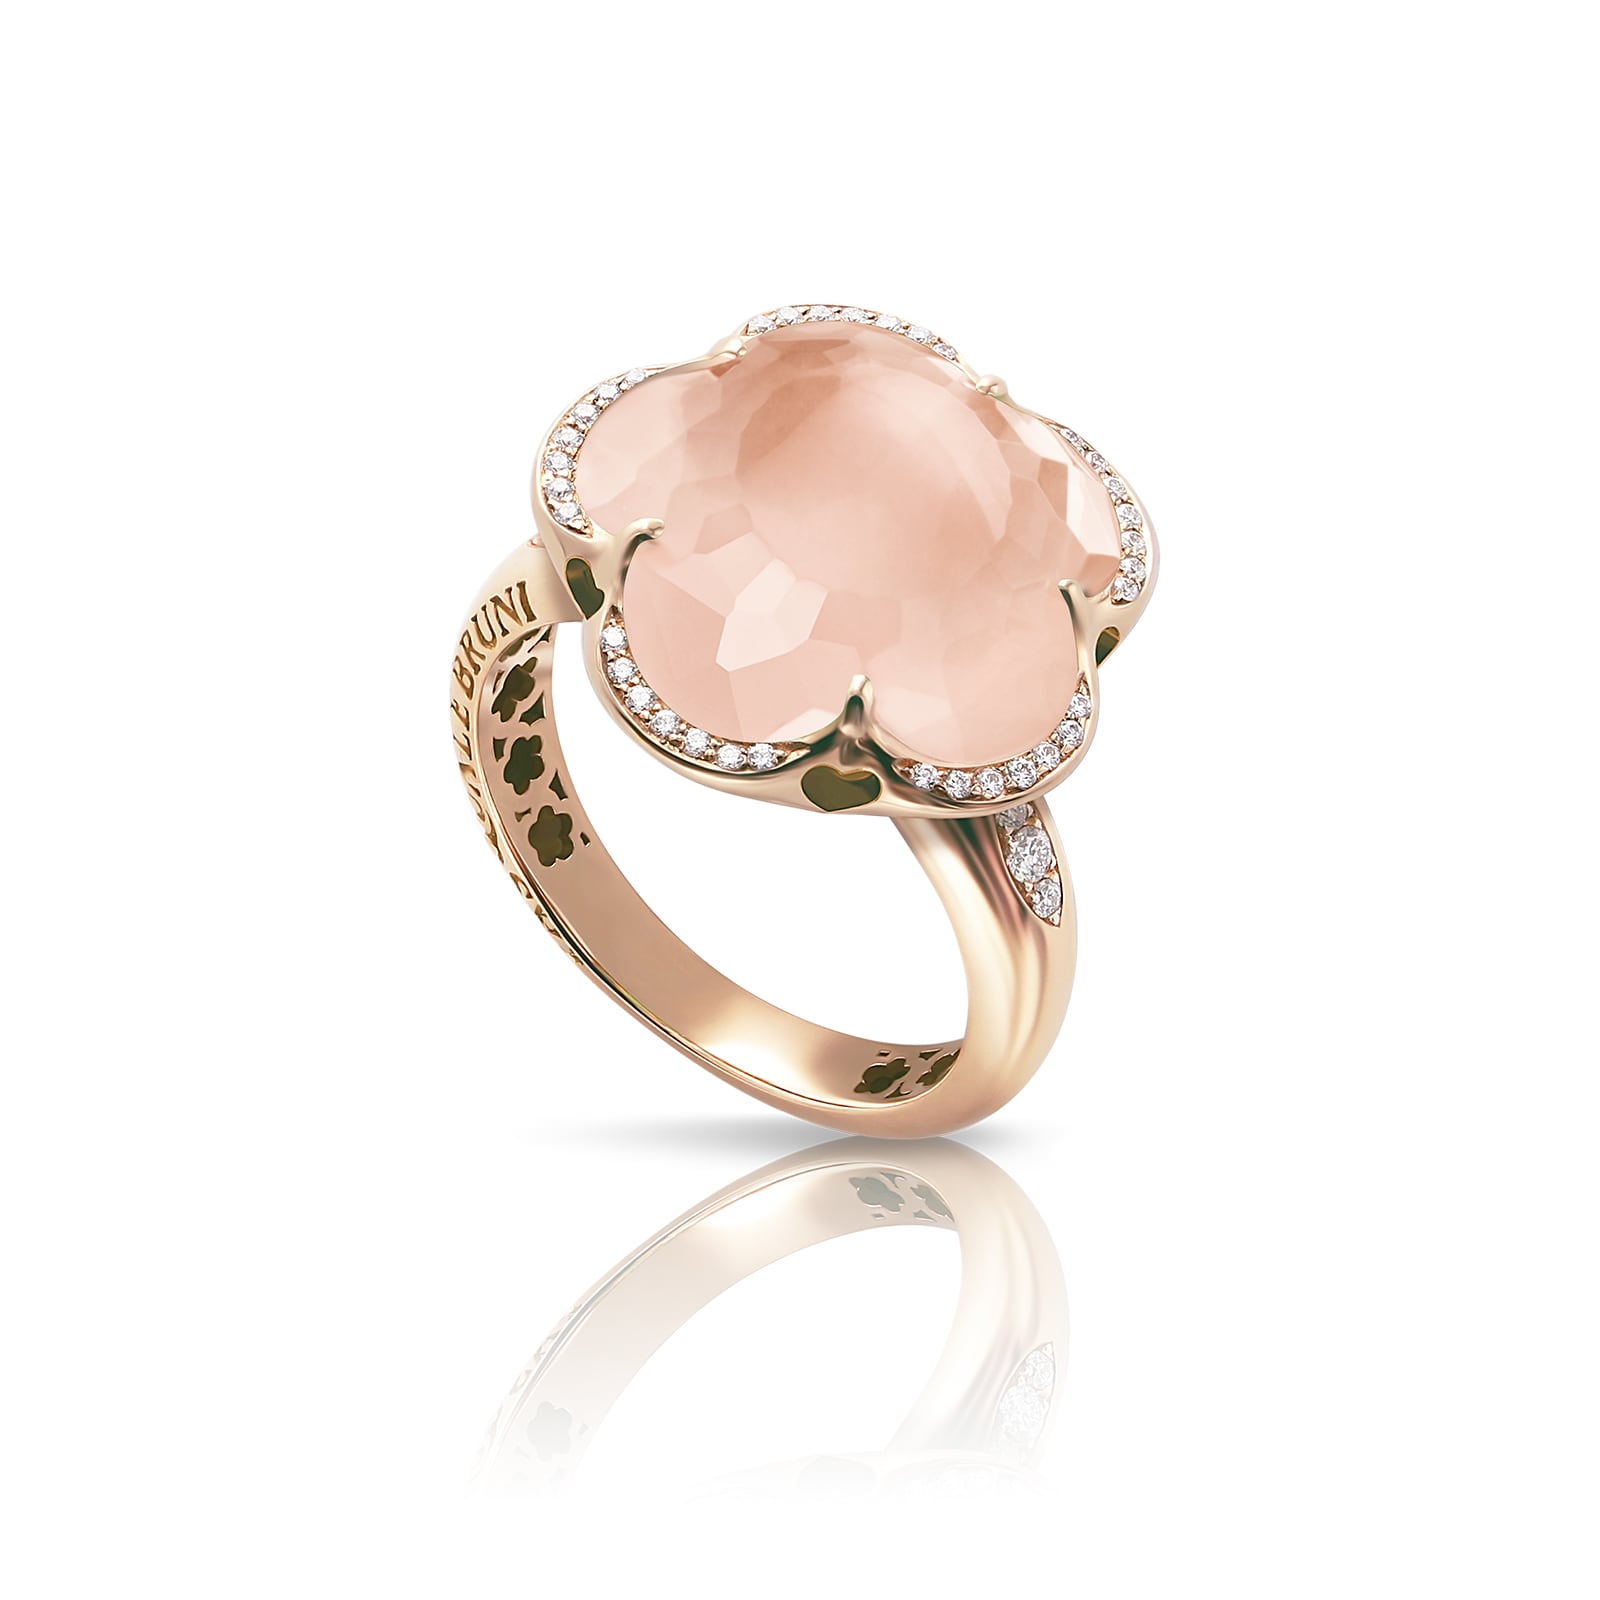 Bon Ton Ring in 18k Rose Gold with Rose Quartz and Diamonds - Ring Size M